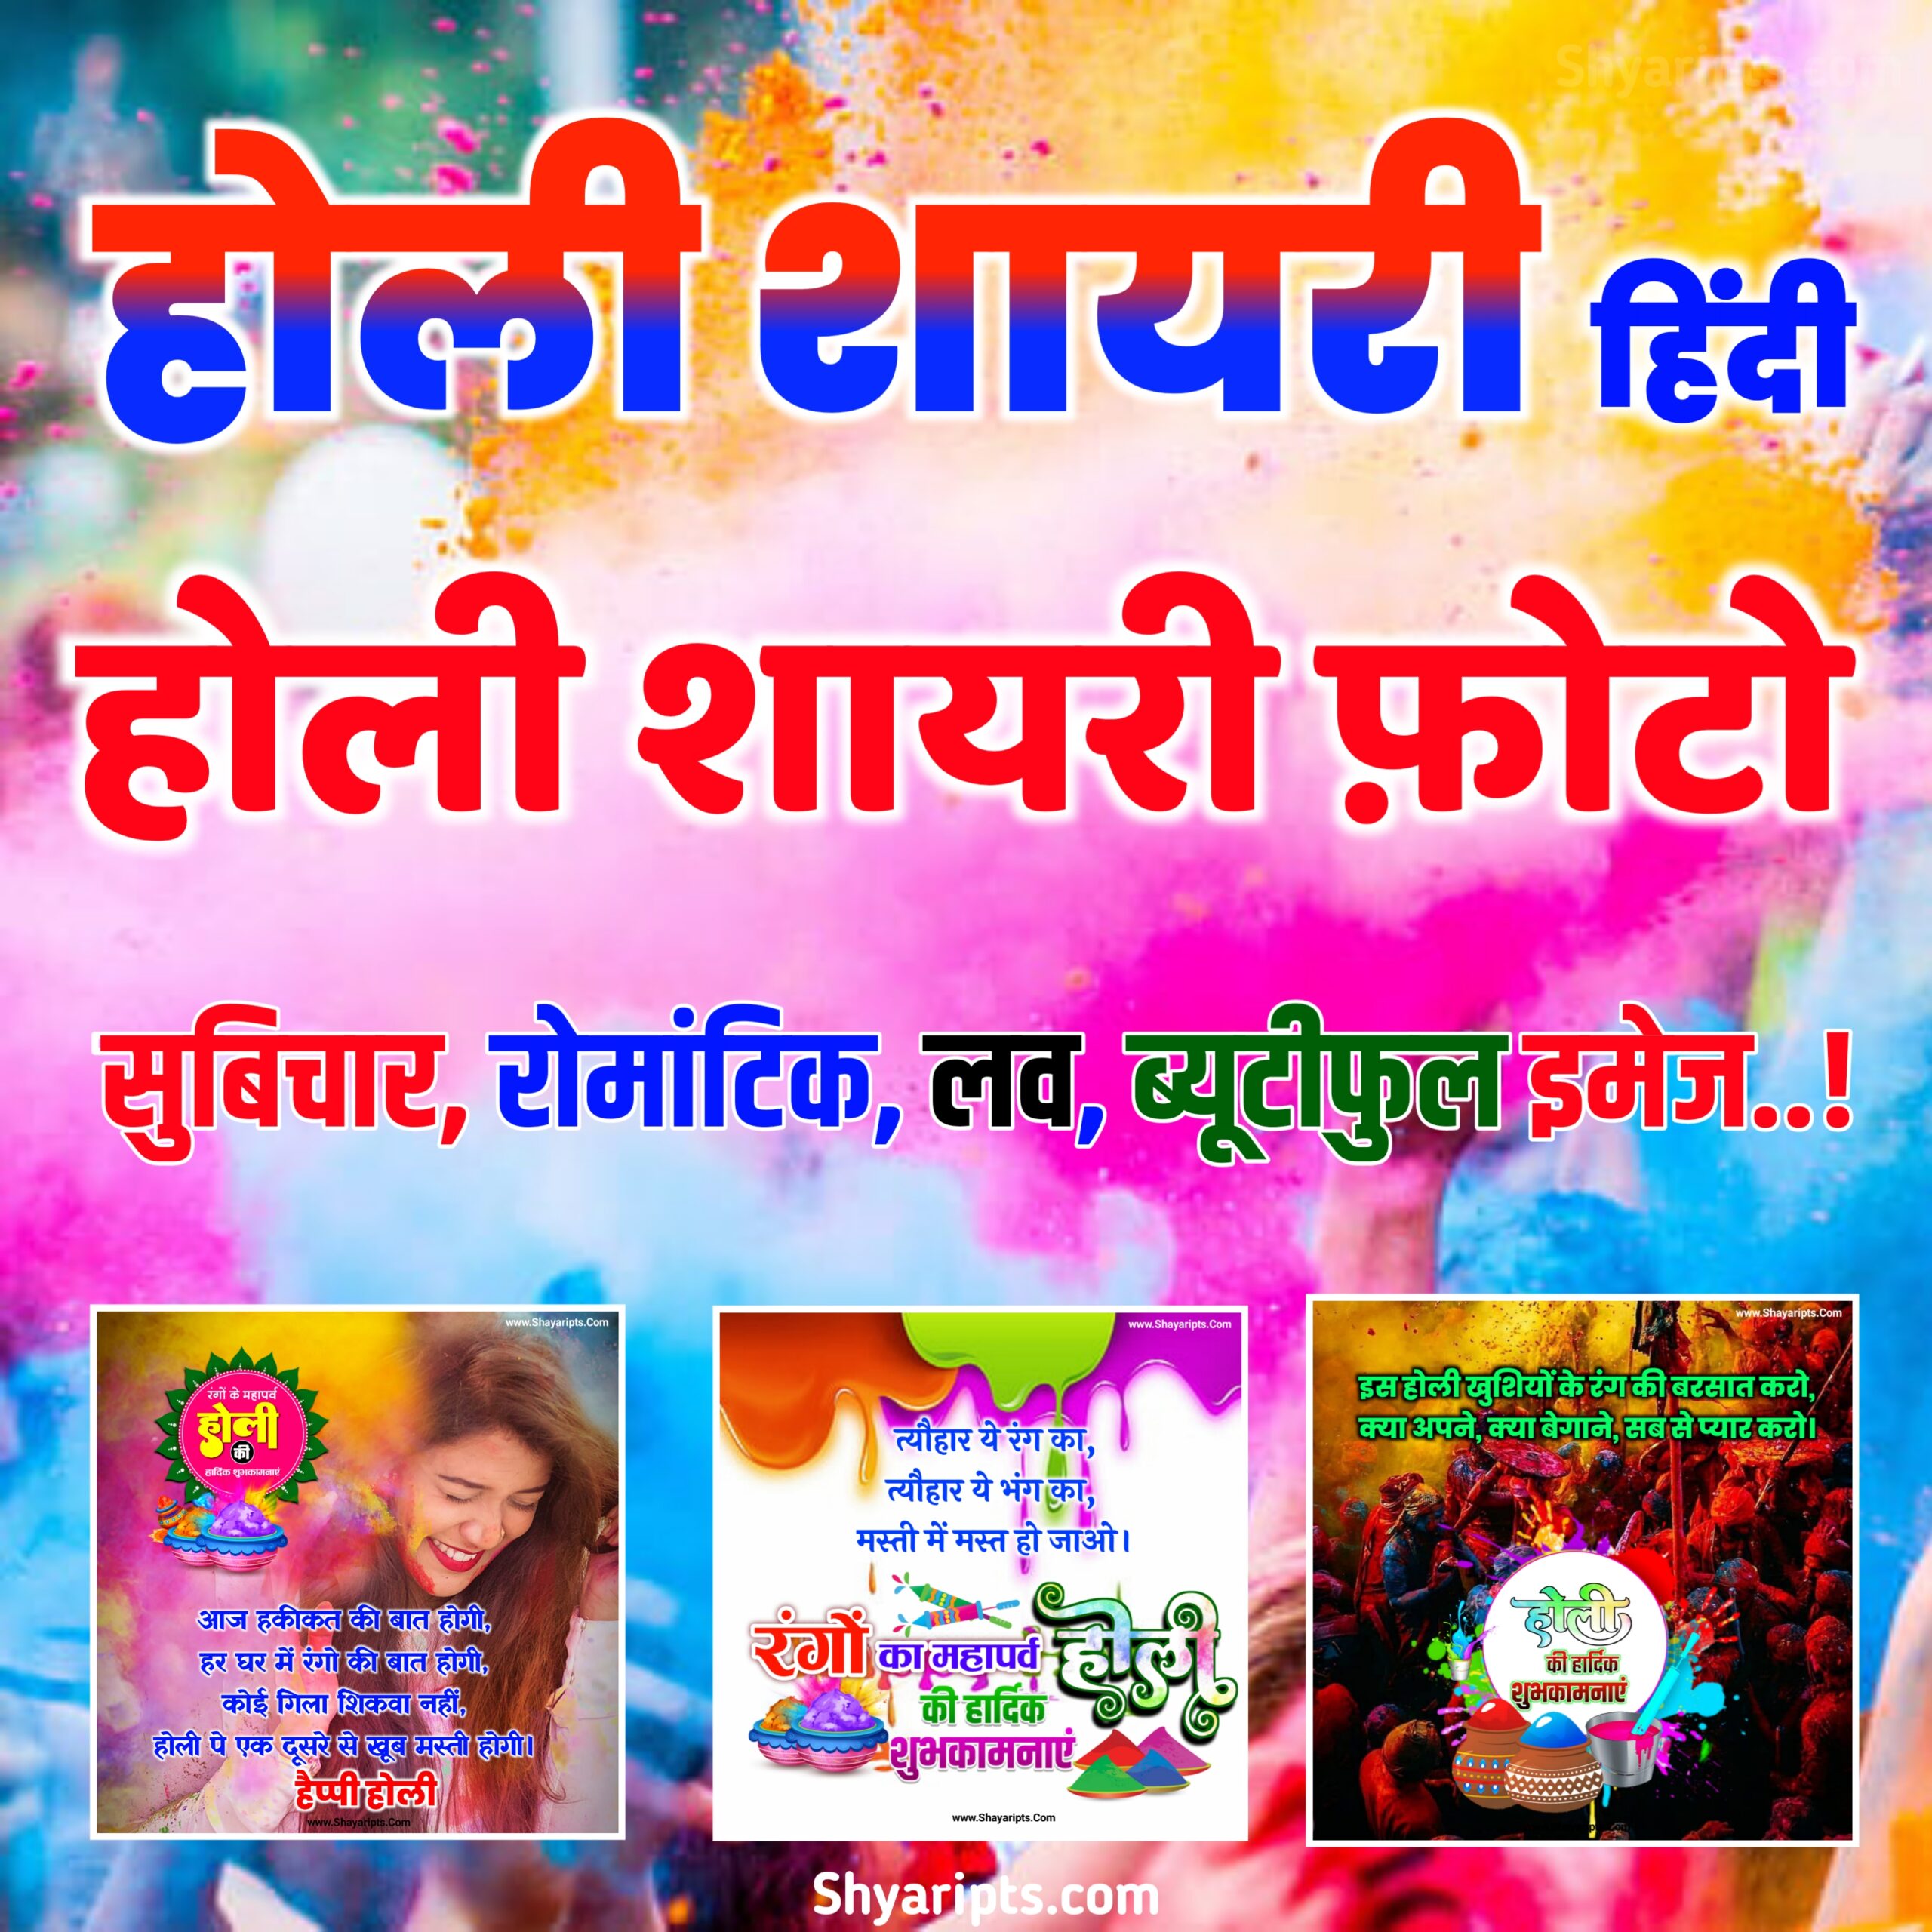 happy holi shayari quotes in Hindi with image| happy holi wishes image | happy Holi status shayari in hindi image| Holi shayari in hindi image| holi ki hardik shubhkamnaen images